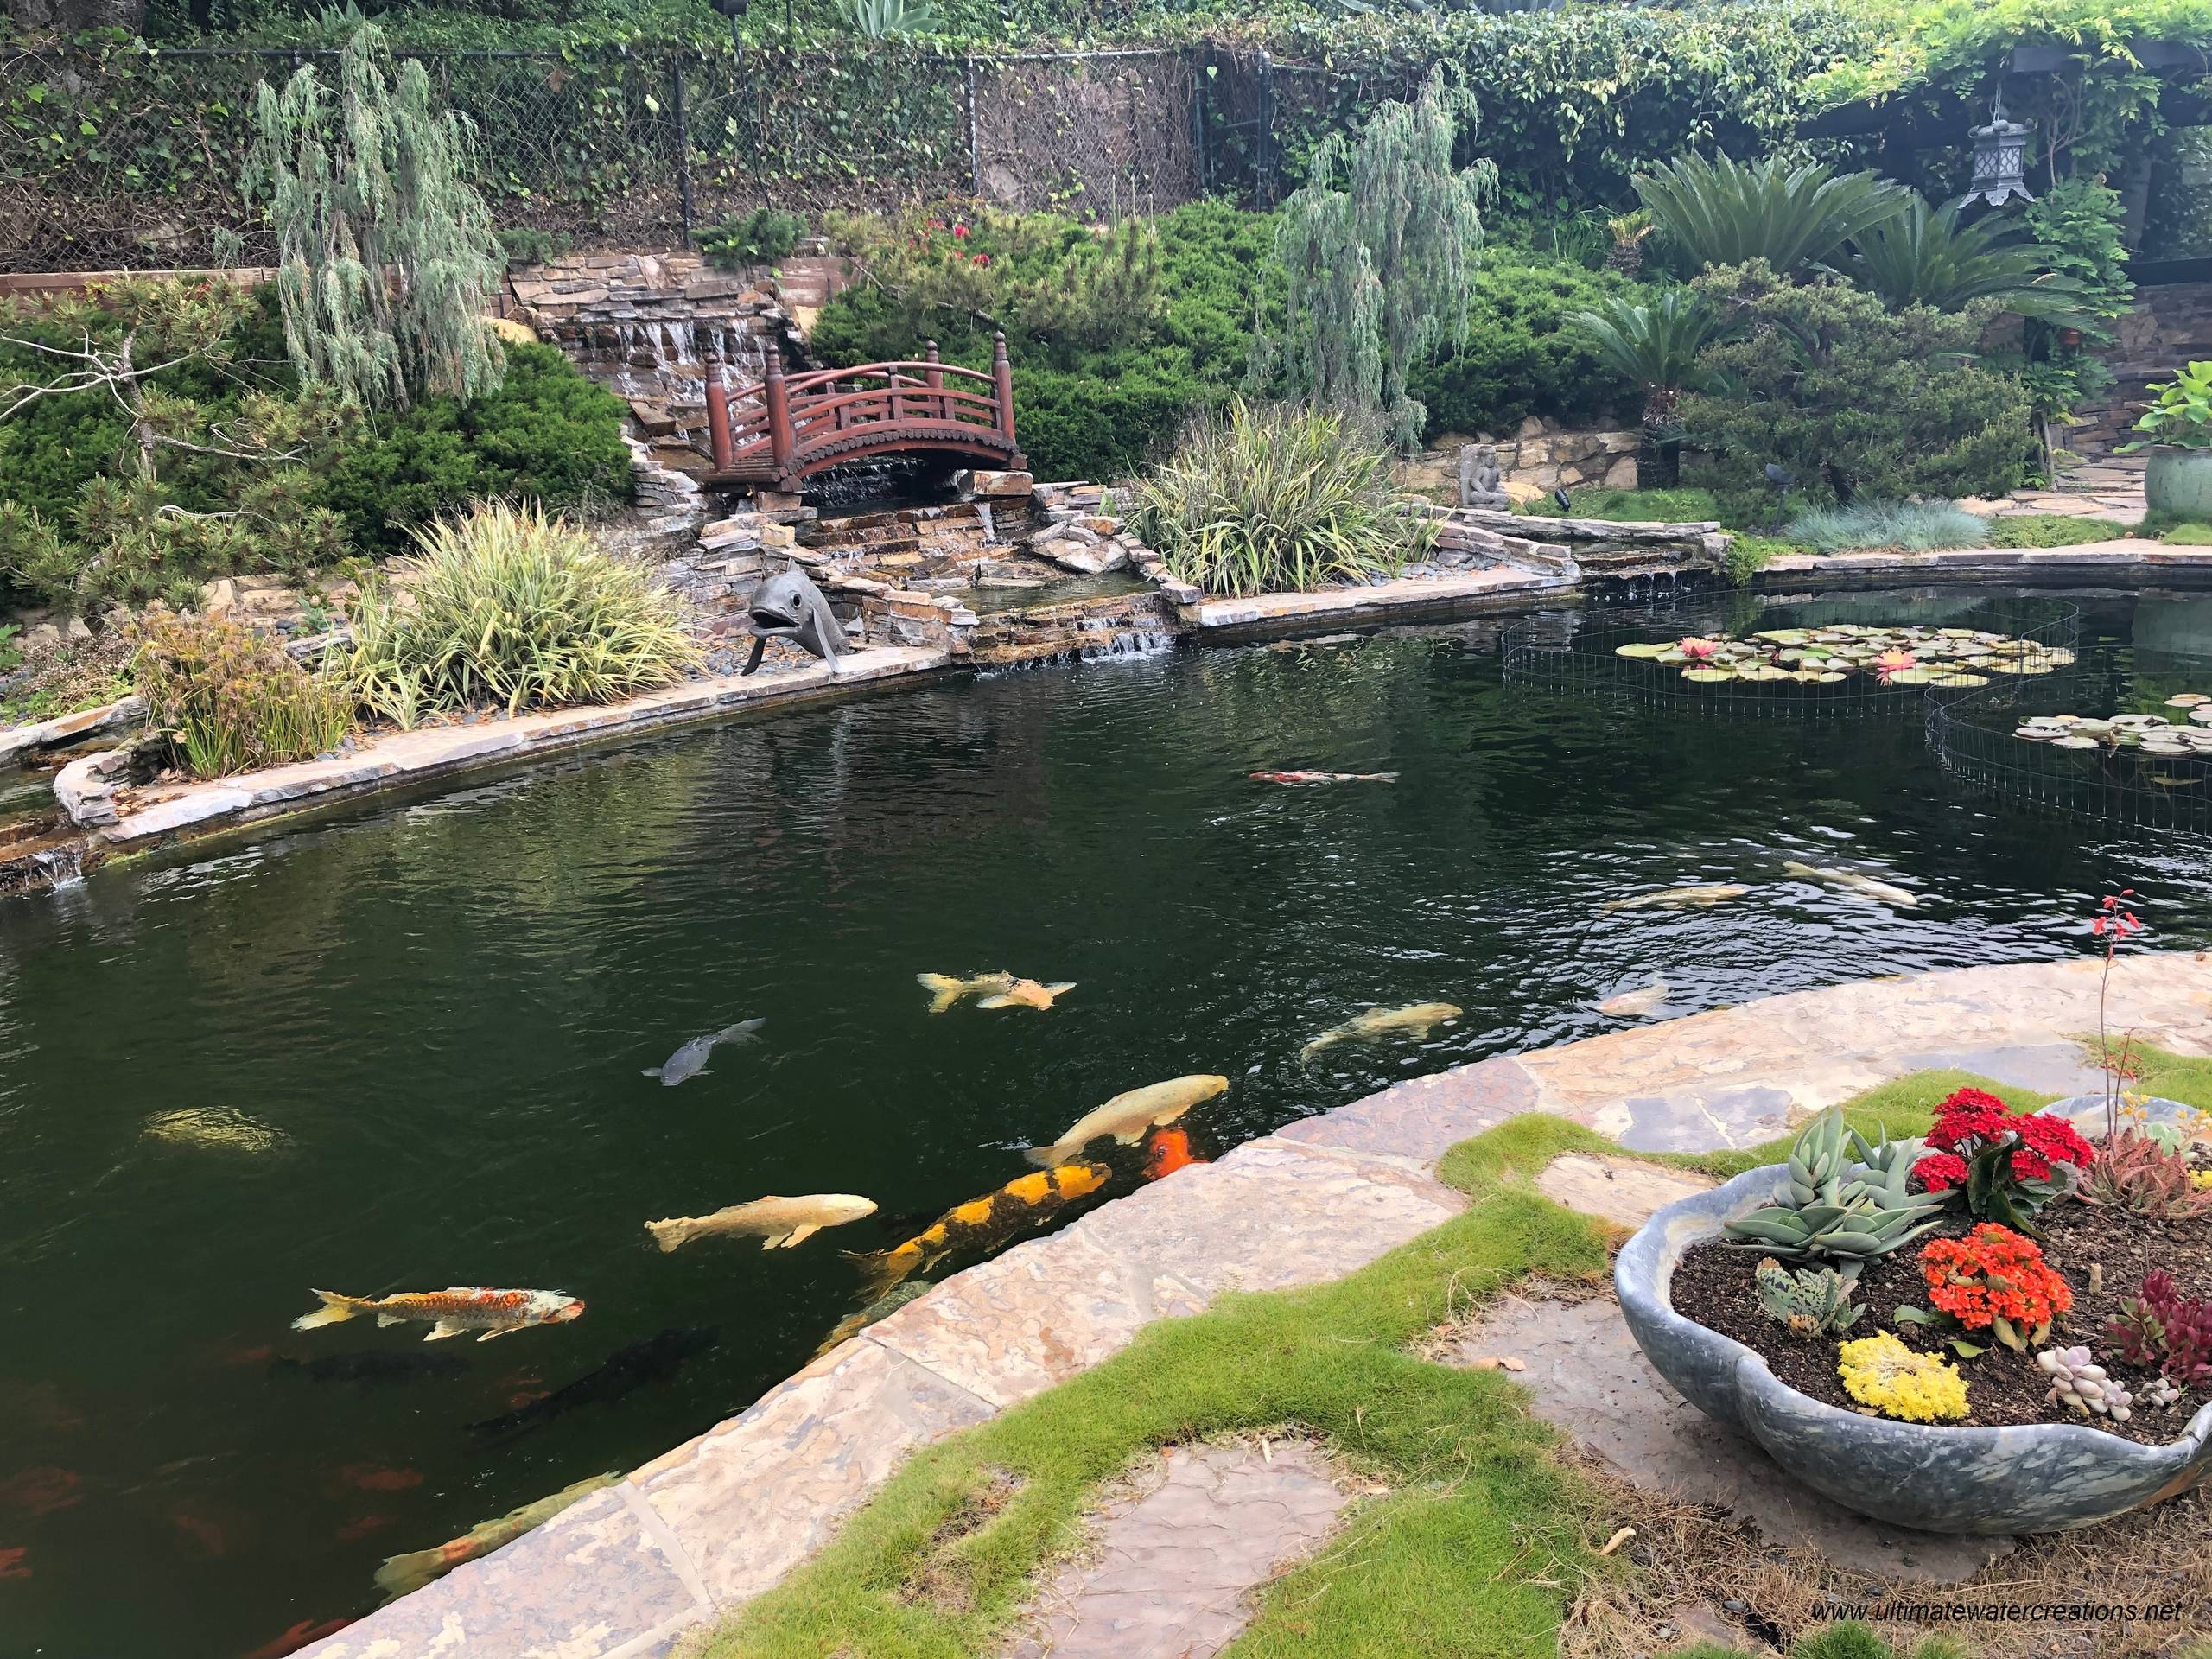 Bel Air - Naturalistic 20'x40' Koi Pond with Landscaping & Bridge